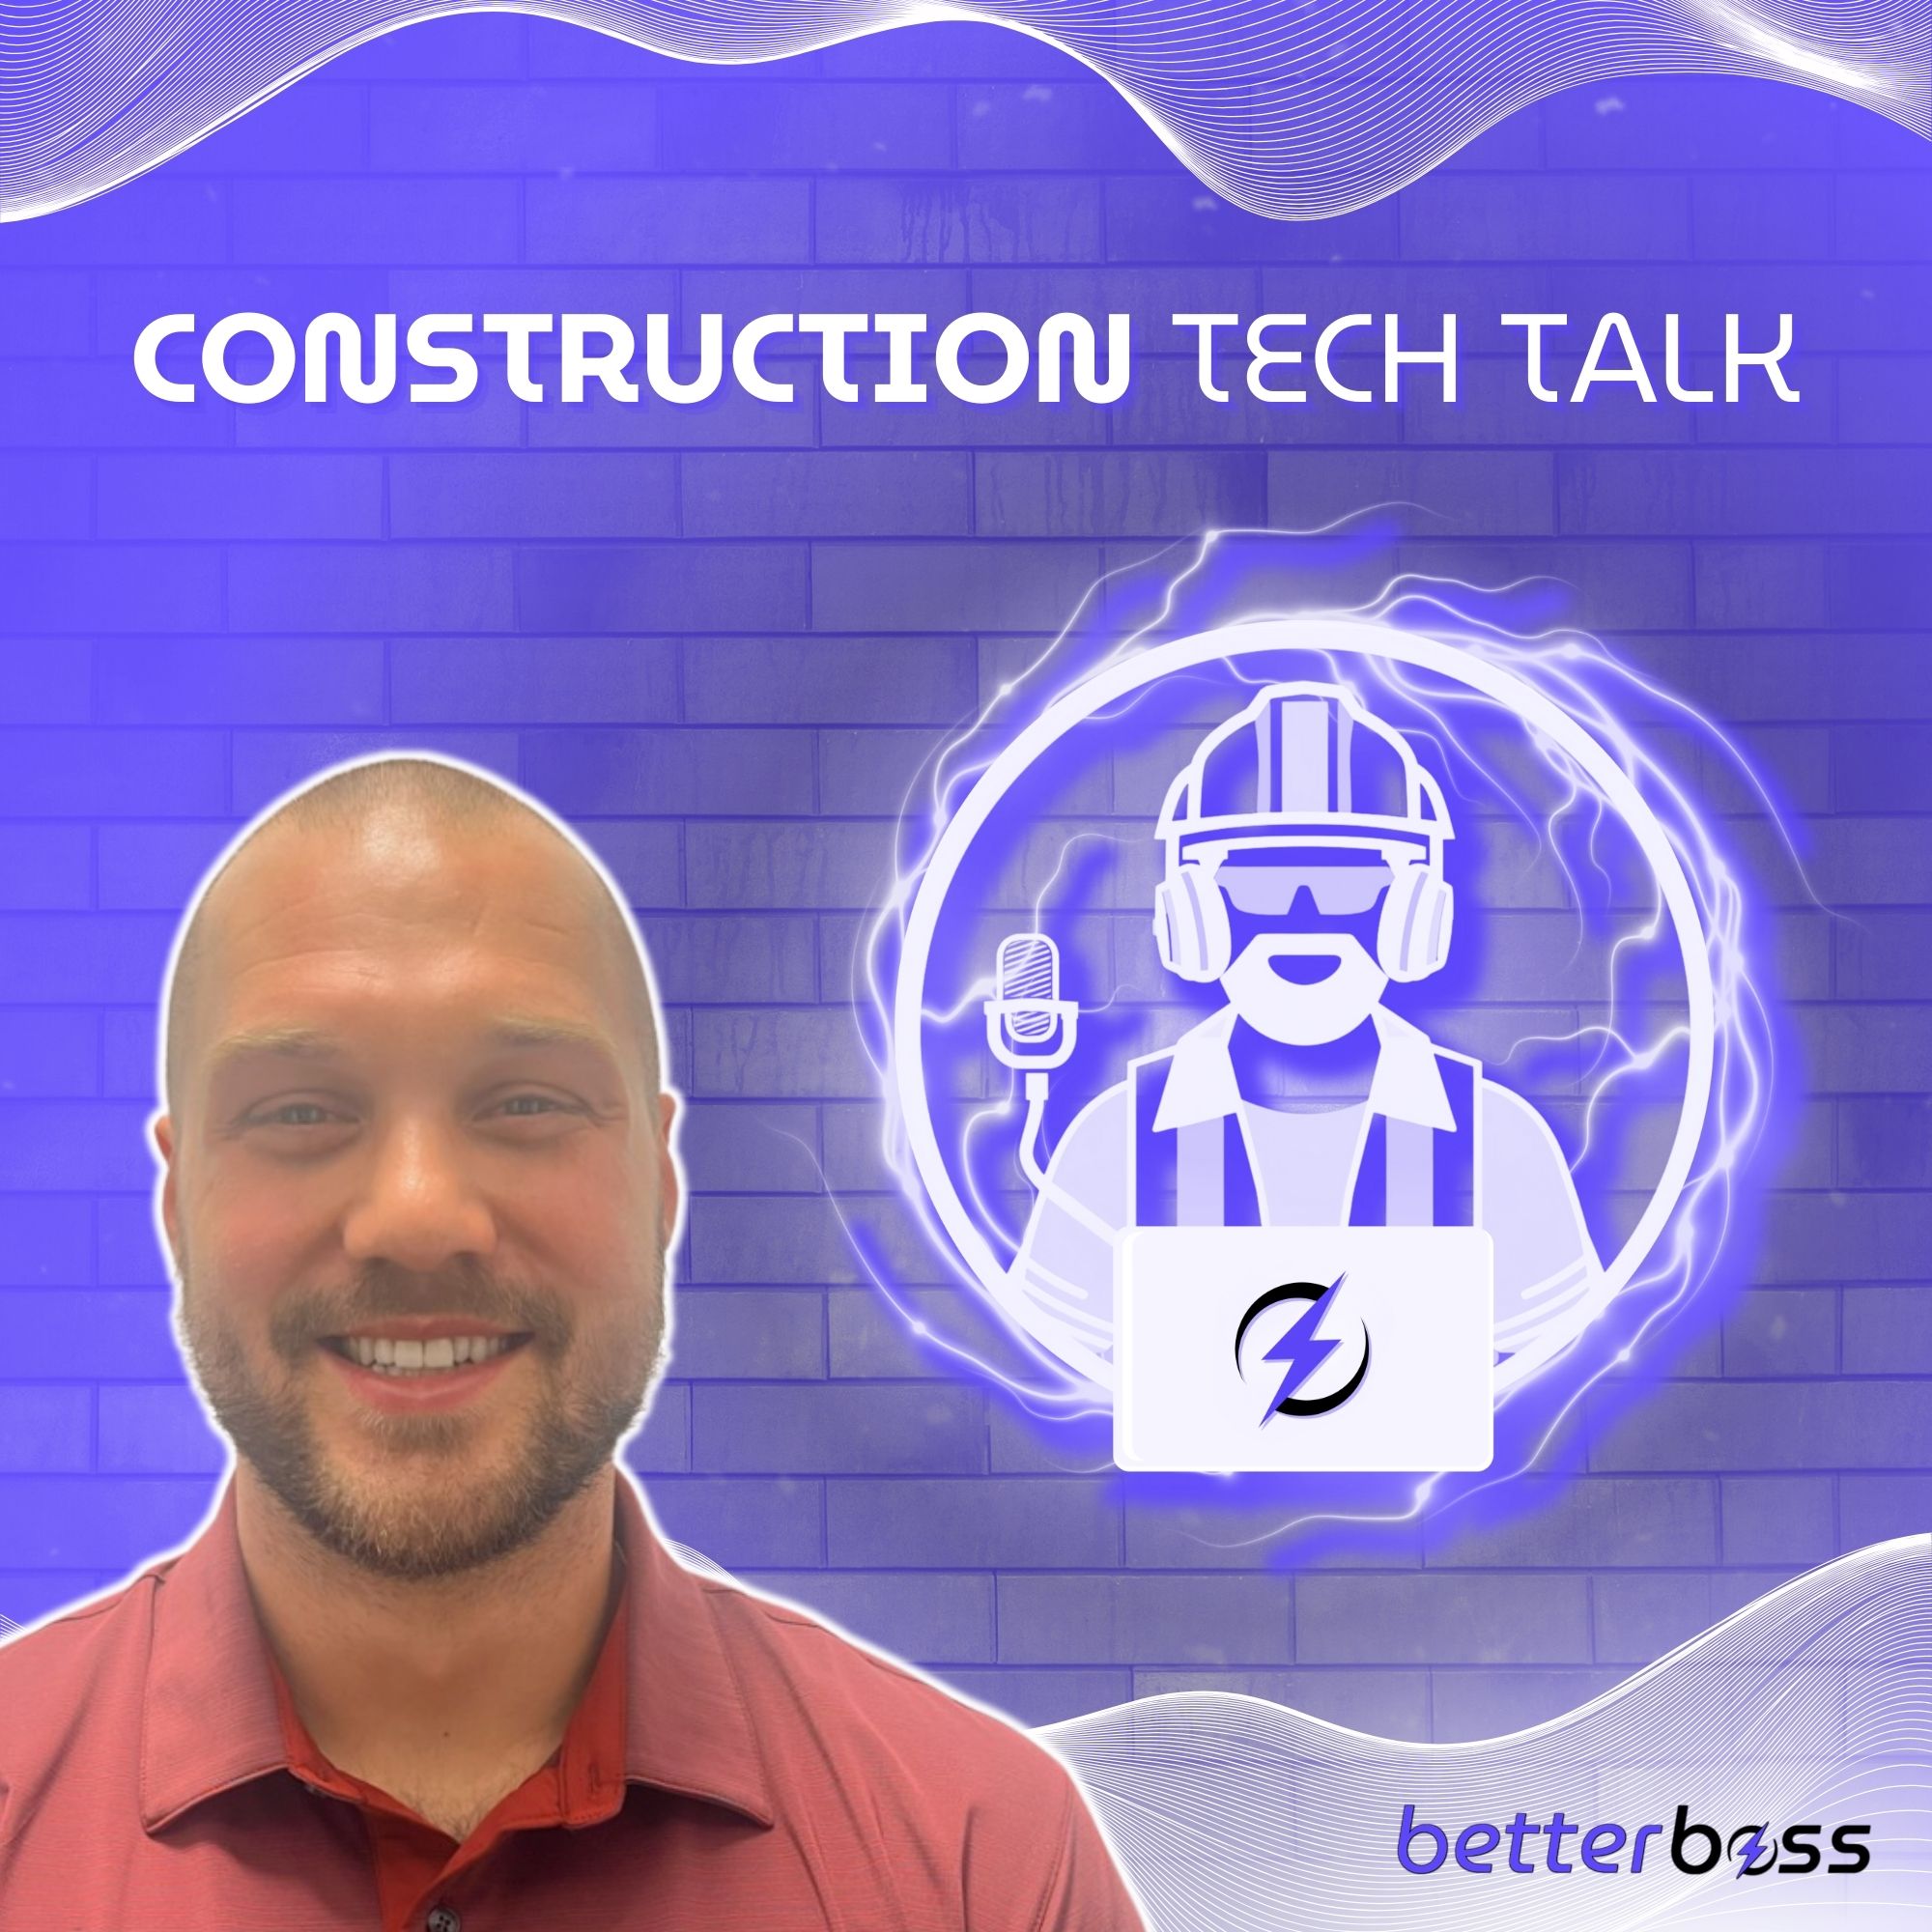 Superintendent Shares Construction Career Path & Construction Life Stories for Construction Career Success - Construction Tech Talk